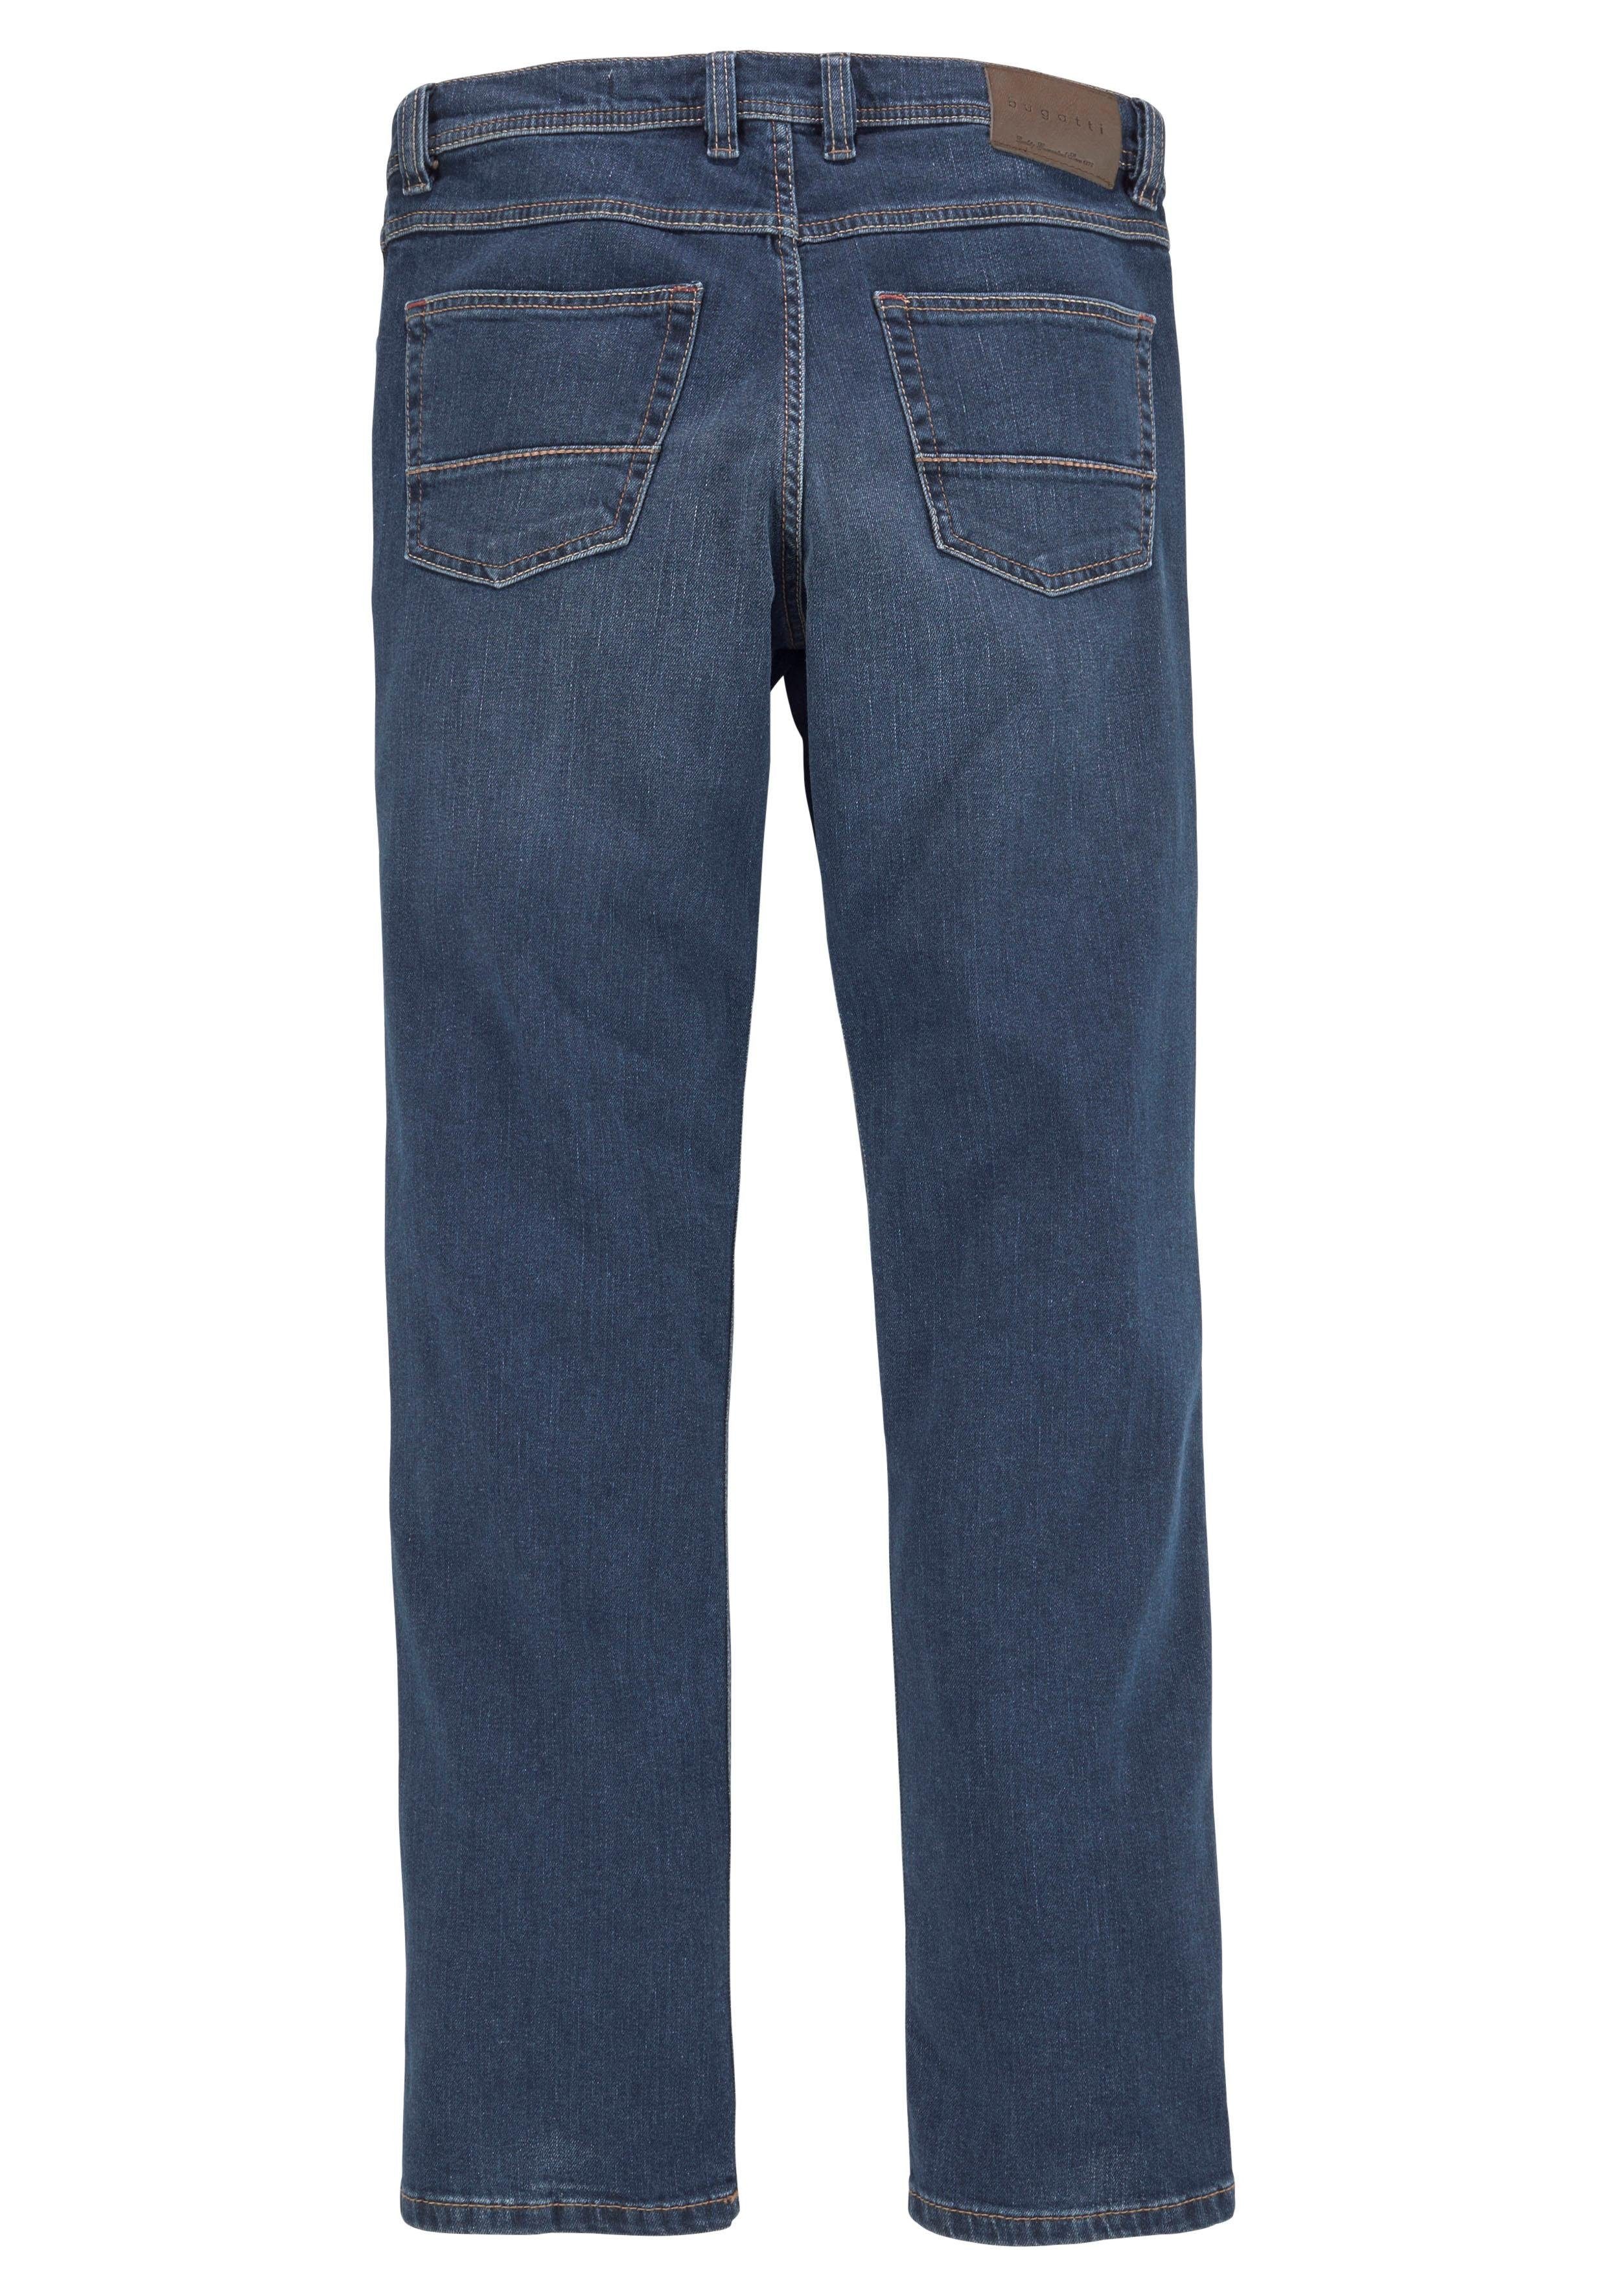 Regular-fit, bugatti Regular-fit-Jeans denim 2farbige Kontrastnähte